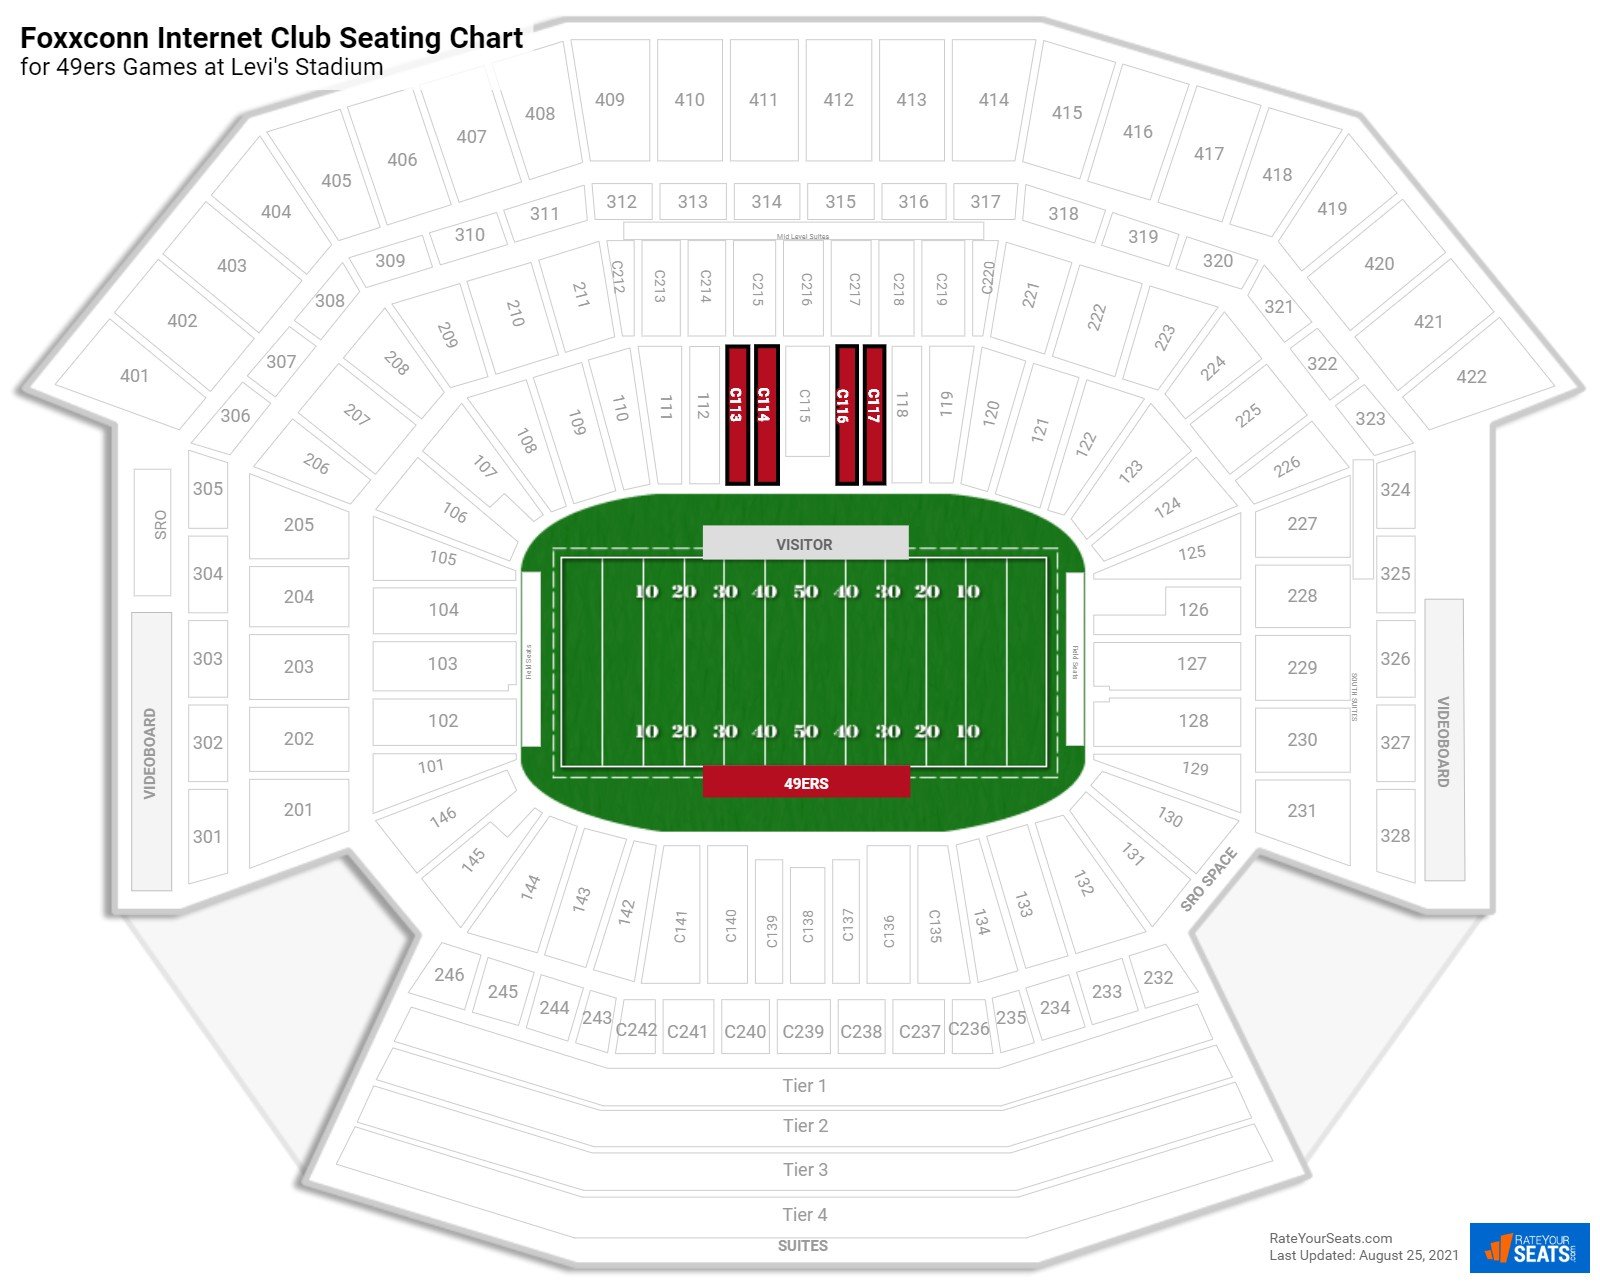 49ers Foxxconn Internet Club Seating Chart at Levi